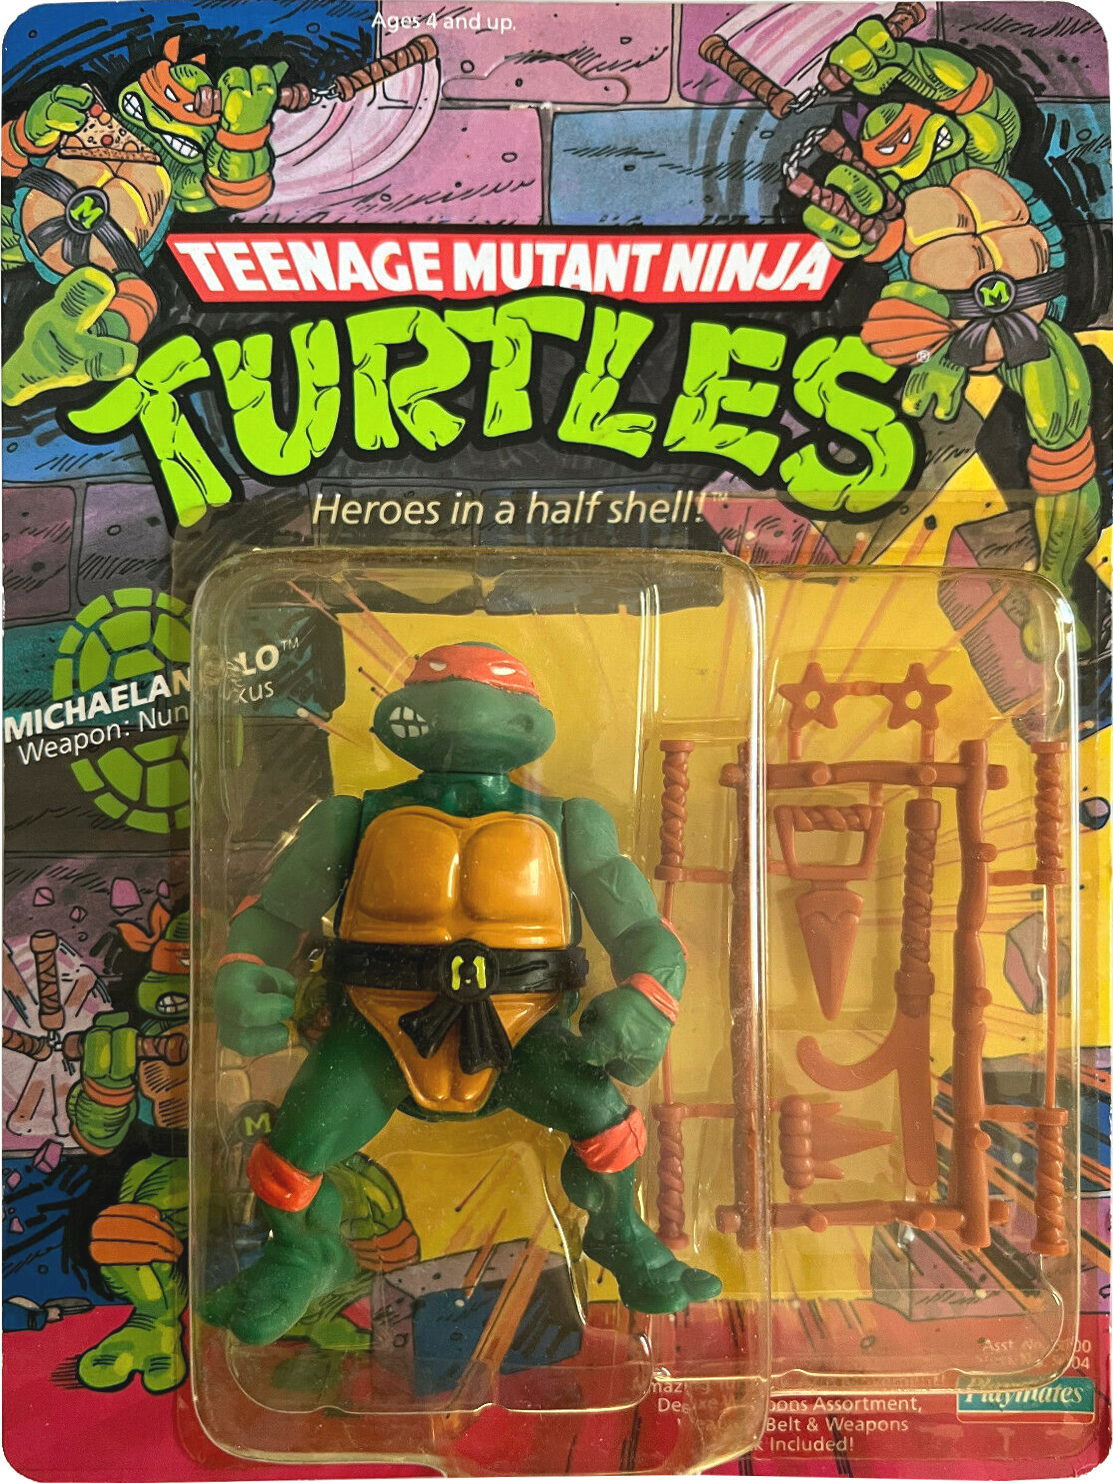 https://www.actionfigure411.com/teenage-mutant-ninja-turtles/images/michaelangelo-4848.jpg